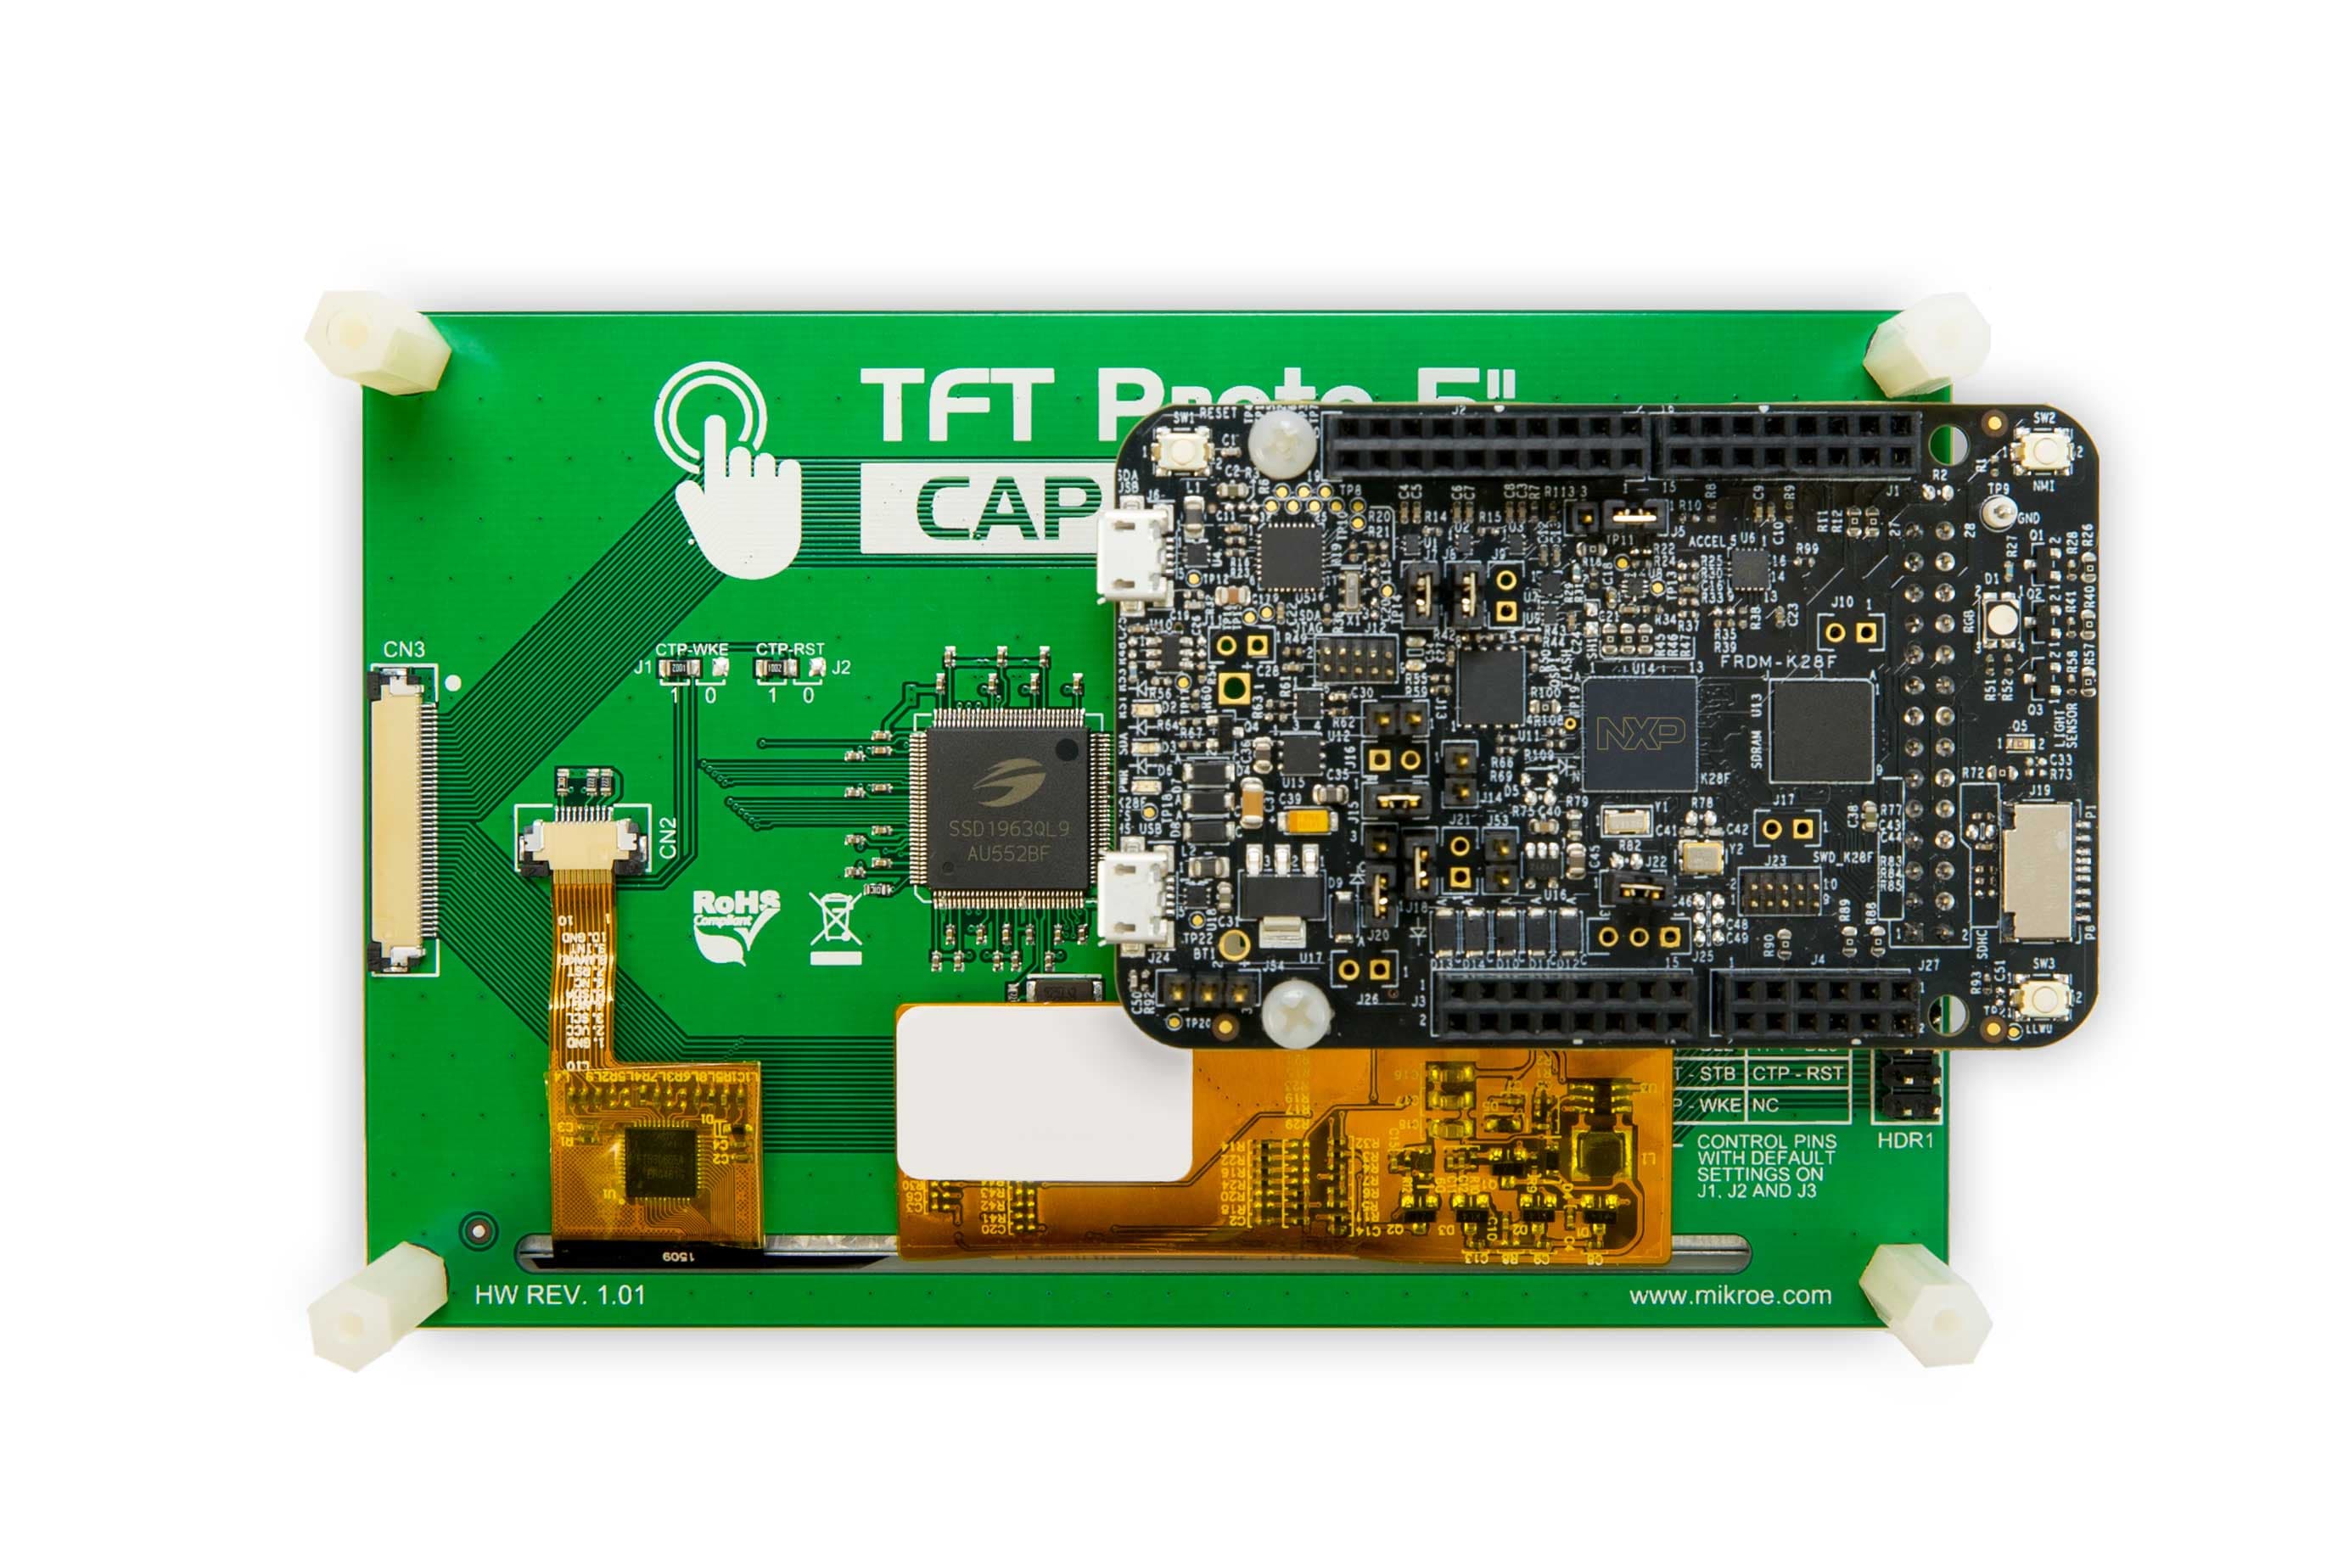 FRDM-K28F Freedom Development Board + MikroElektronika TFT Proto 5” CAPACITIVE